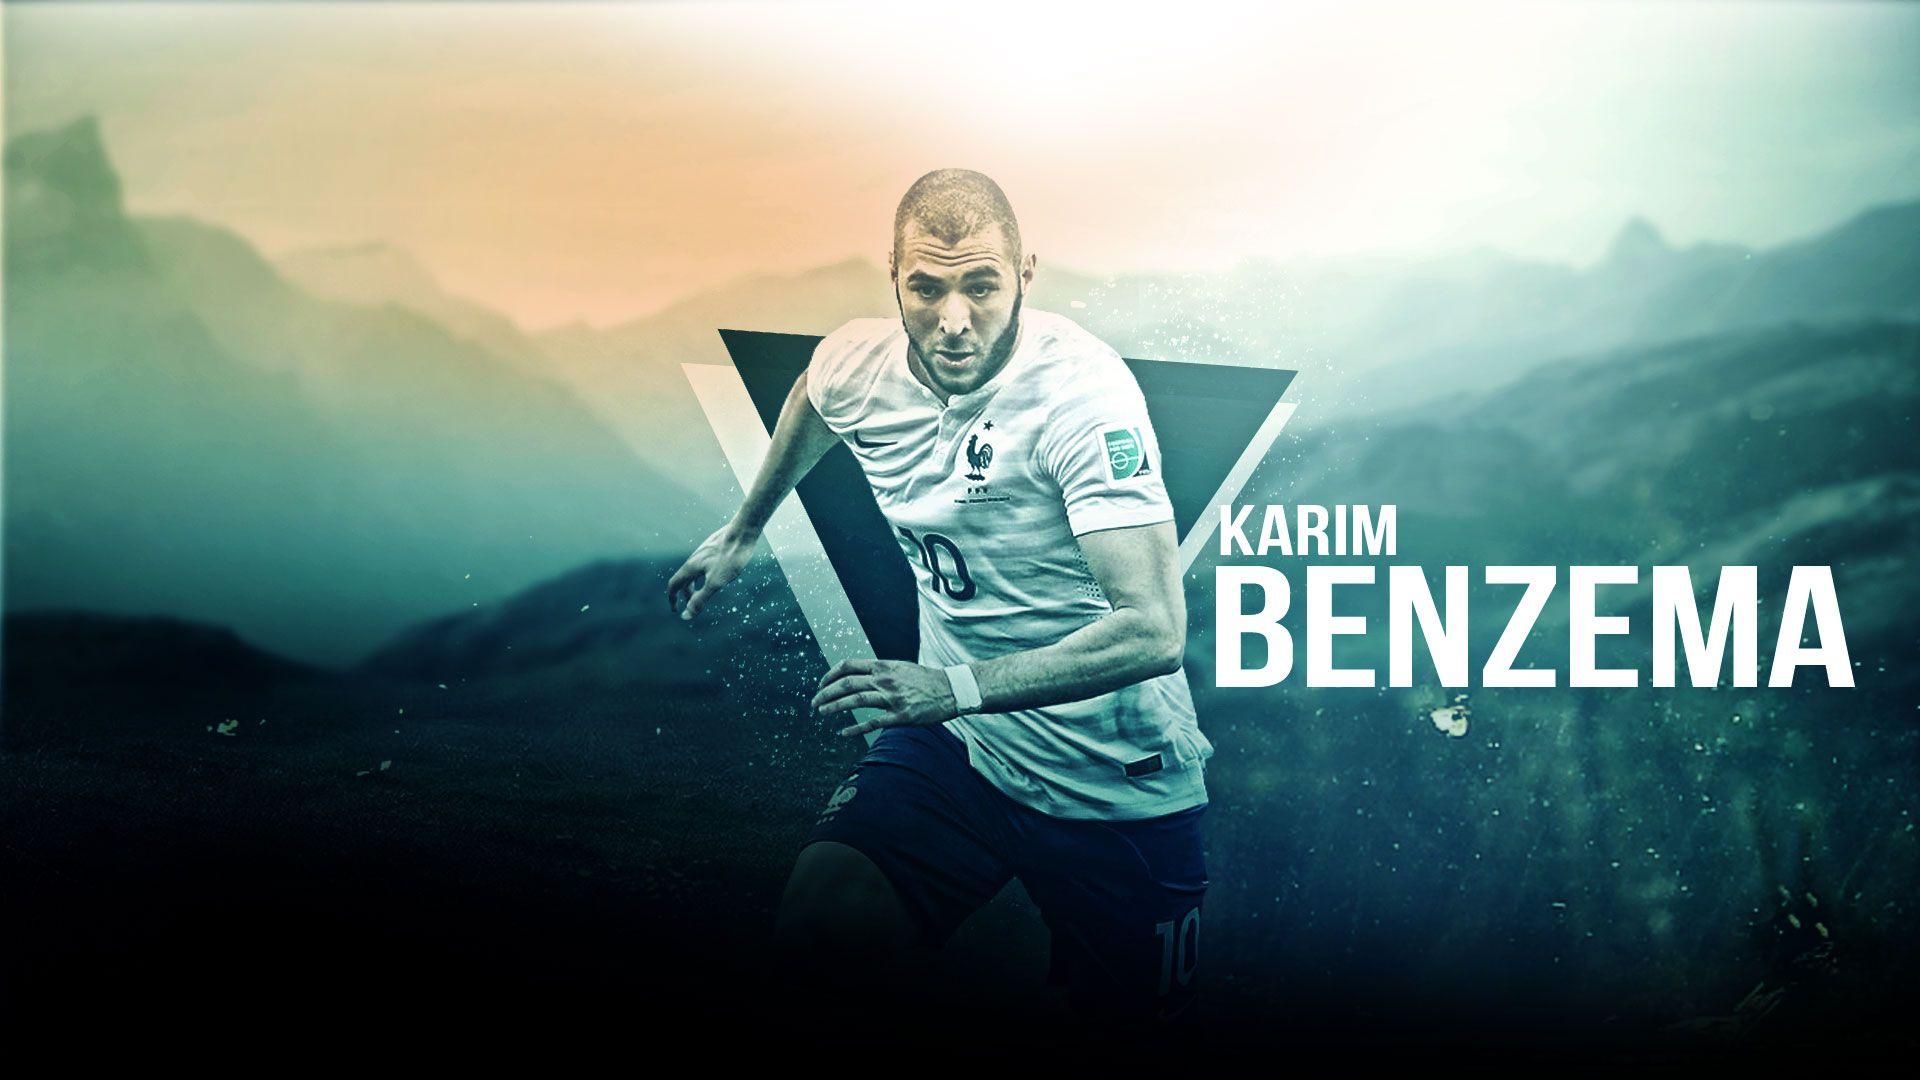 Karim Benzema HD Image, Get Free top quality Karim Benzema HD